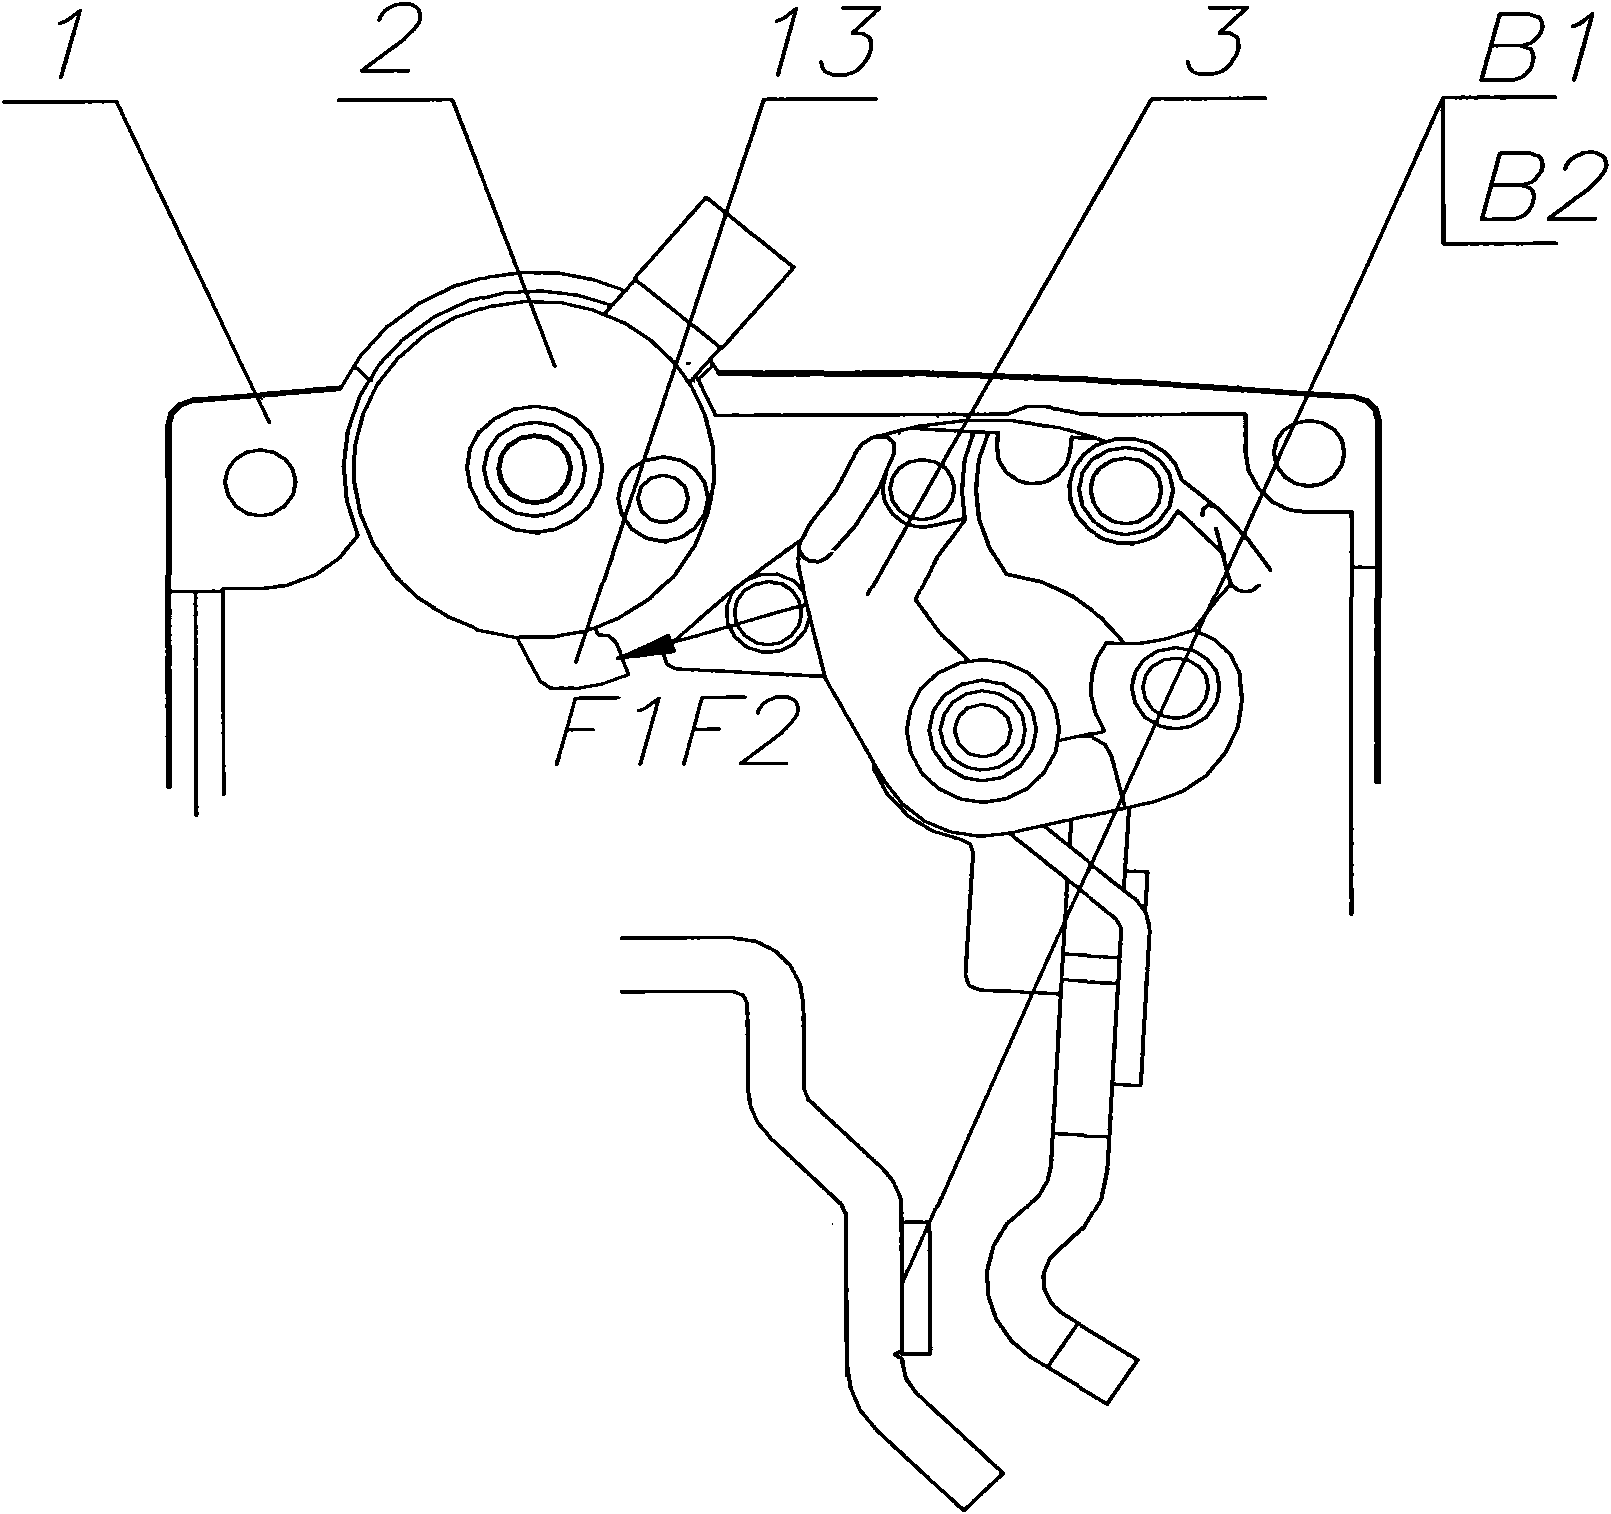 Co-directional serial double-break small circuit breaker